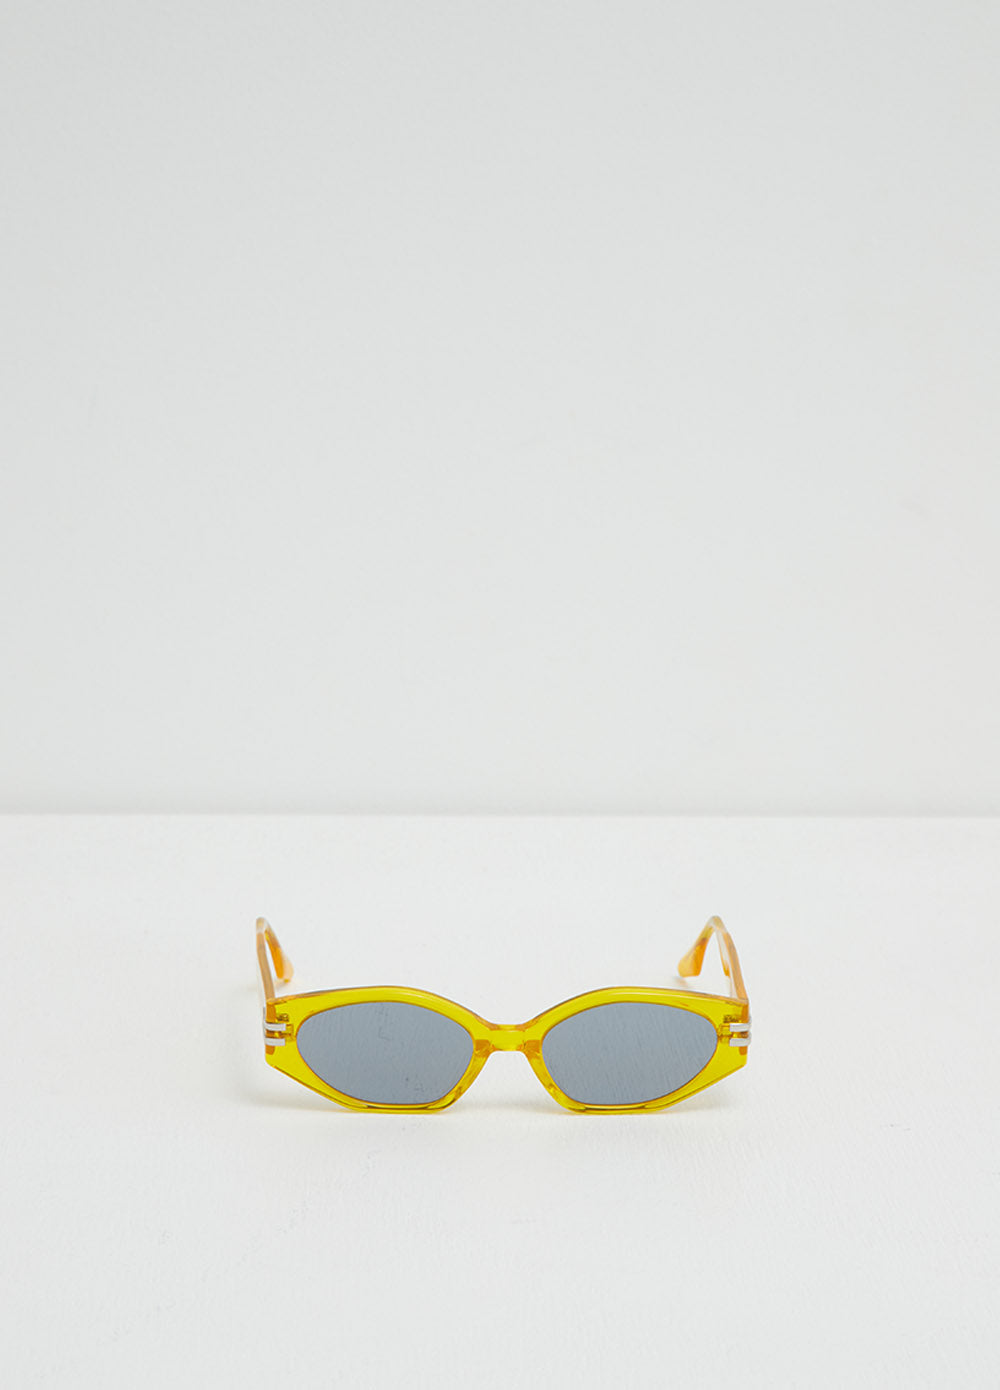 Ghost Y2 Sunglasses